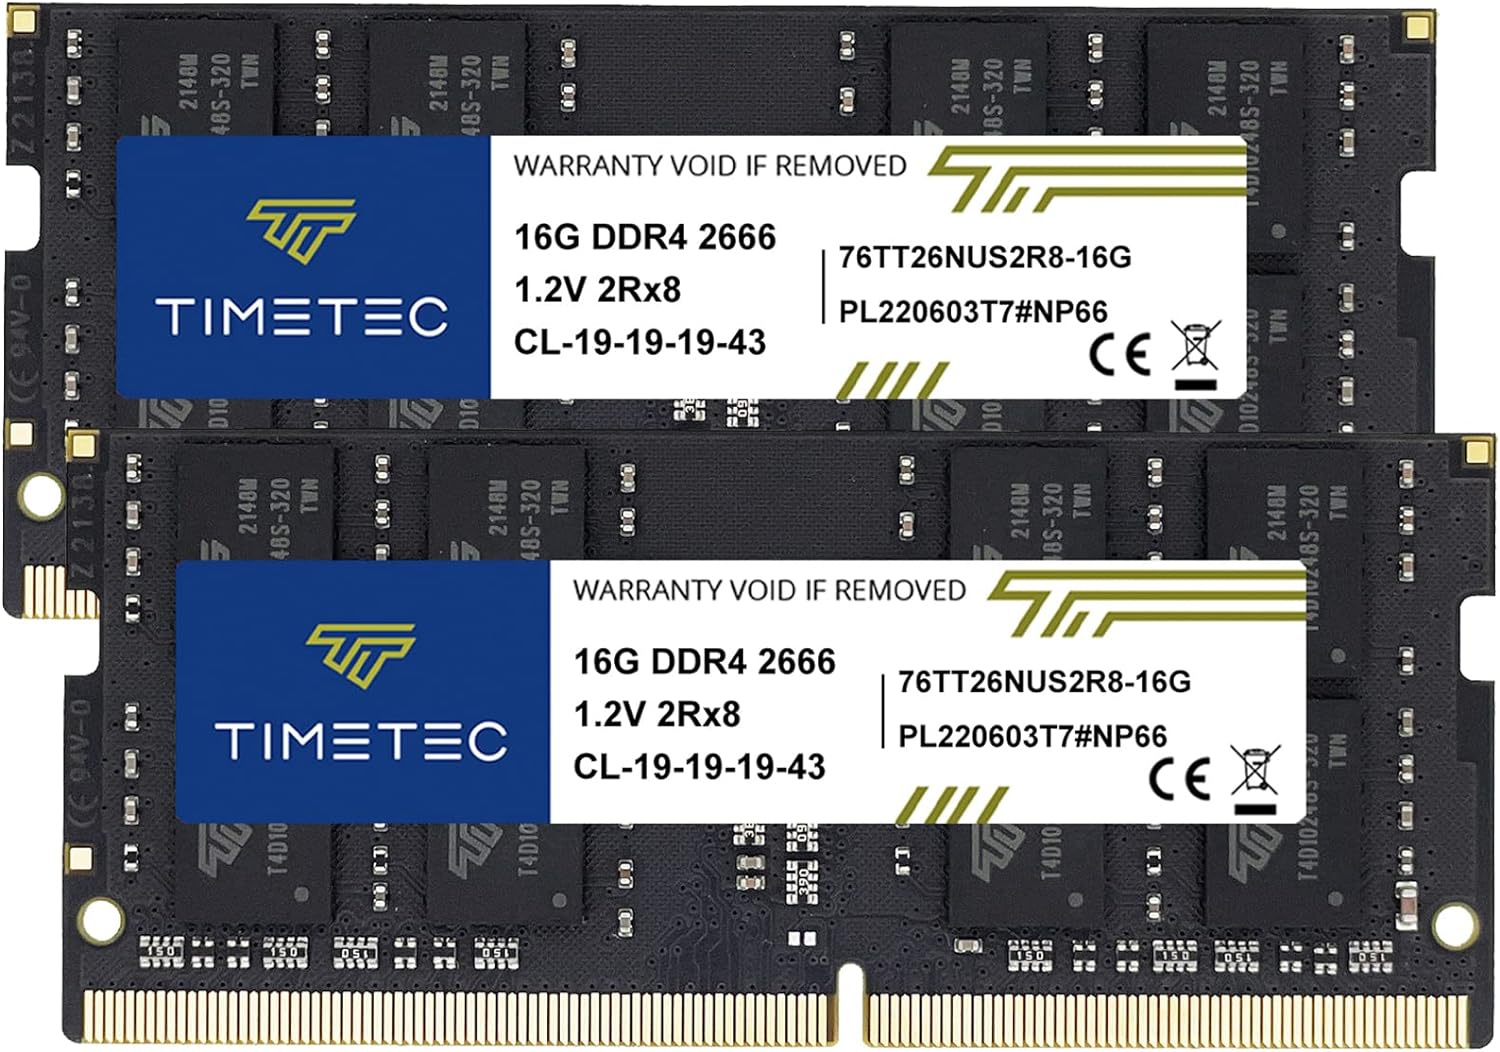 Timetec 16GB DDR4 2666MHz (DDR4-2666) PC4-21300 (PC4-2666V) Non-ECC Unbuffered 1.2V CL19 2Rx8 Dual Rank 260 Pin SODIMM Laptop Notebook PC Computer Memory RAM Module Upgrade (16GB)